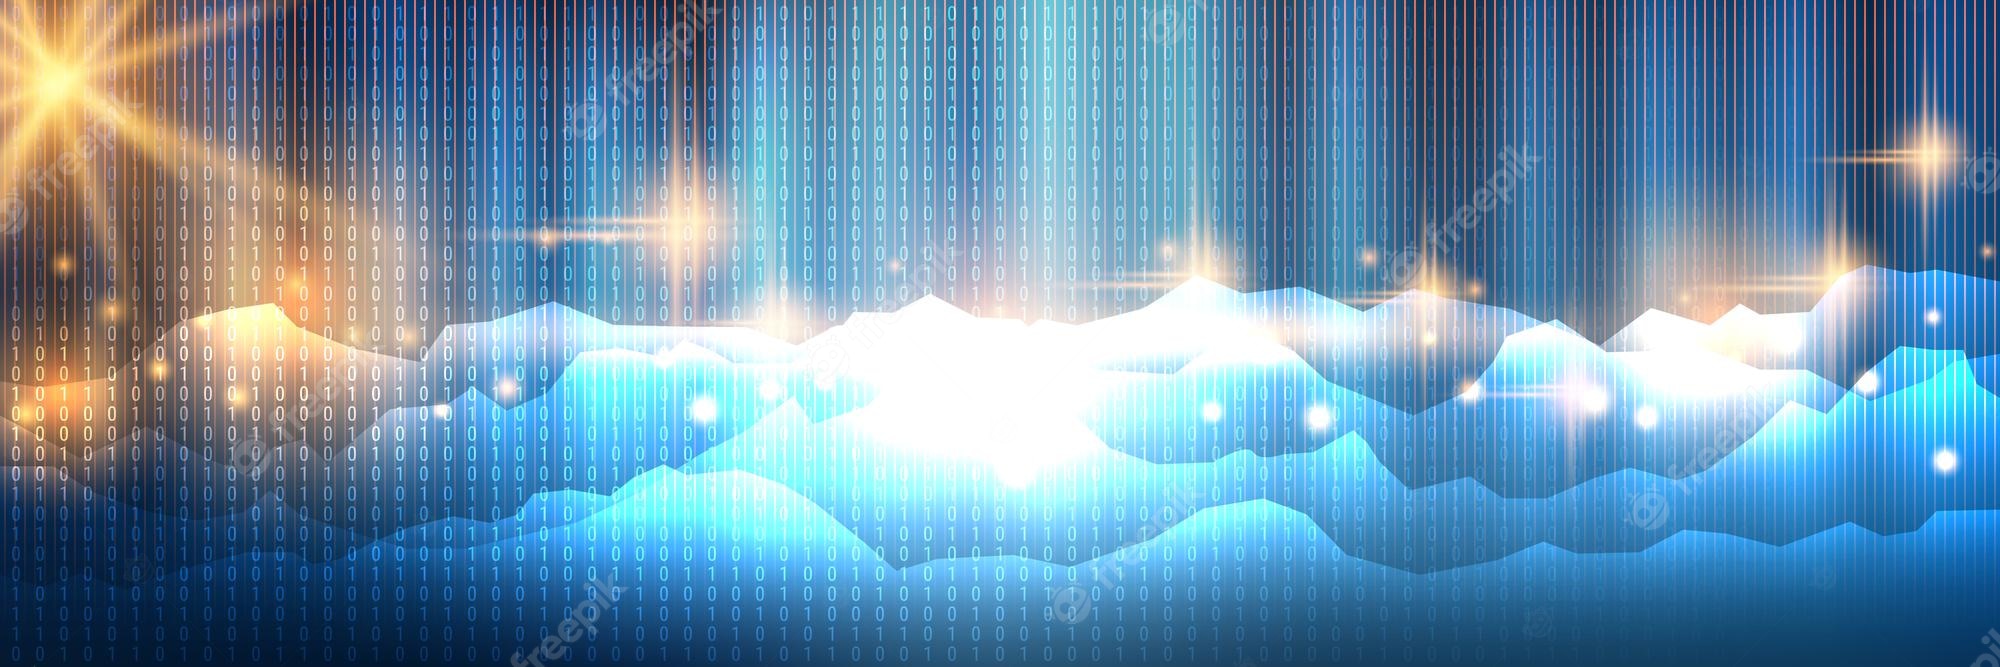 Digital illustration of a binary cloud - Alien